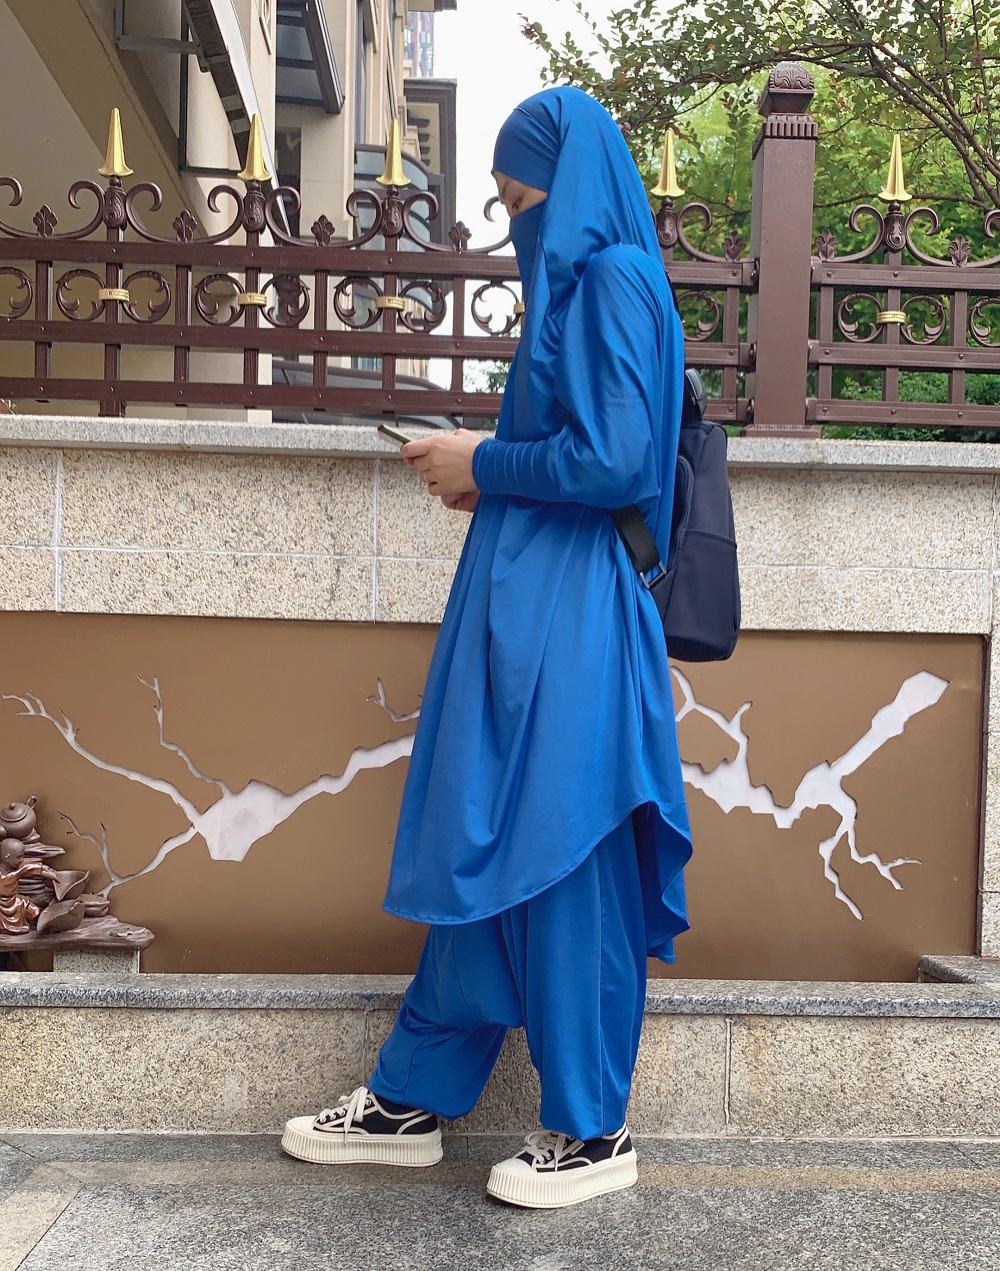 Hooded Muslim Women Hijab dress Prayer Jilbab Abaya Long Khimar Full Cover 2pcs set Islamic Clothes